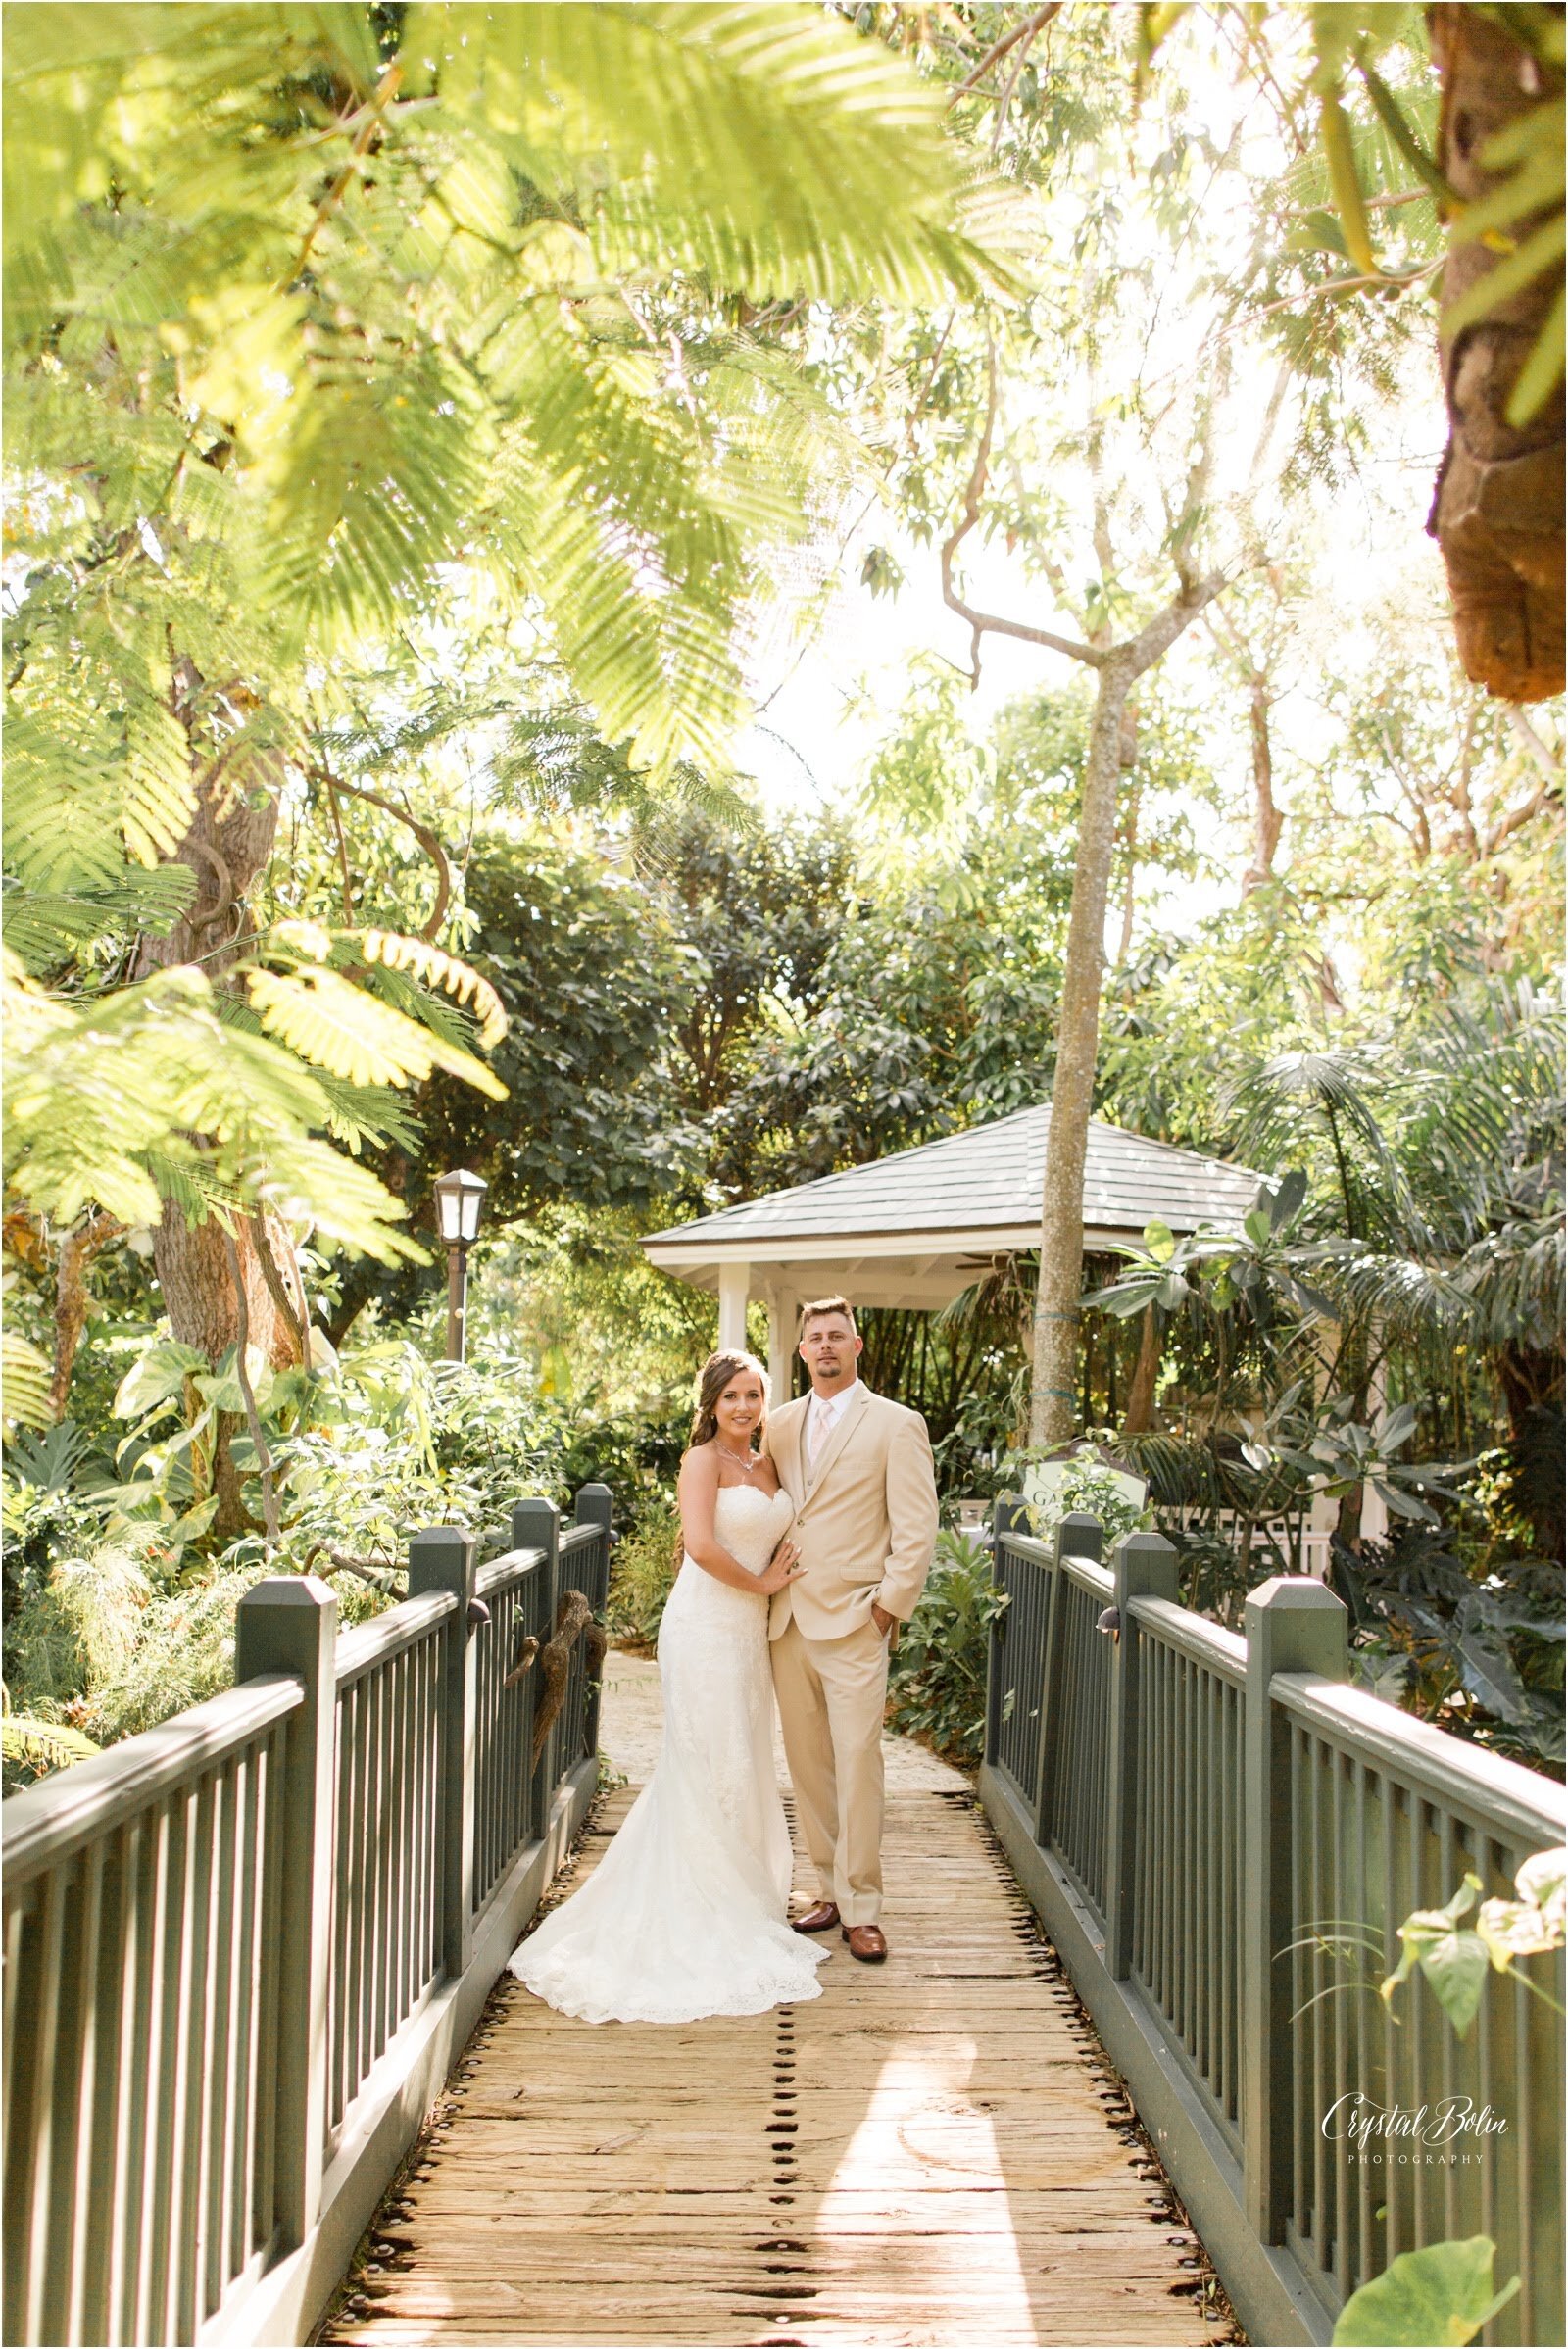 Kirsten & Joseph | Elegant Sundy House Wedding in Delray Beach, 